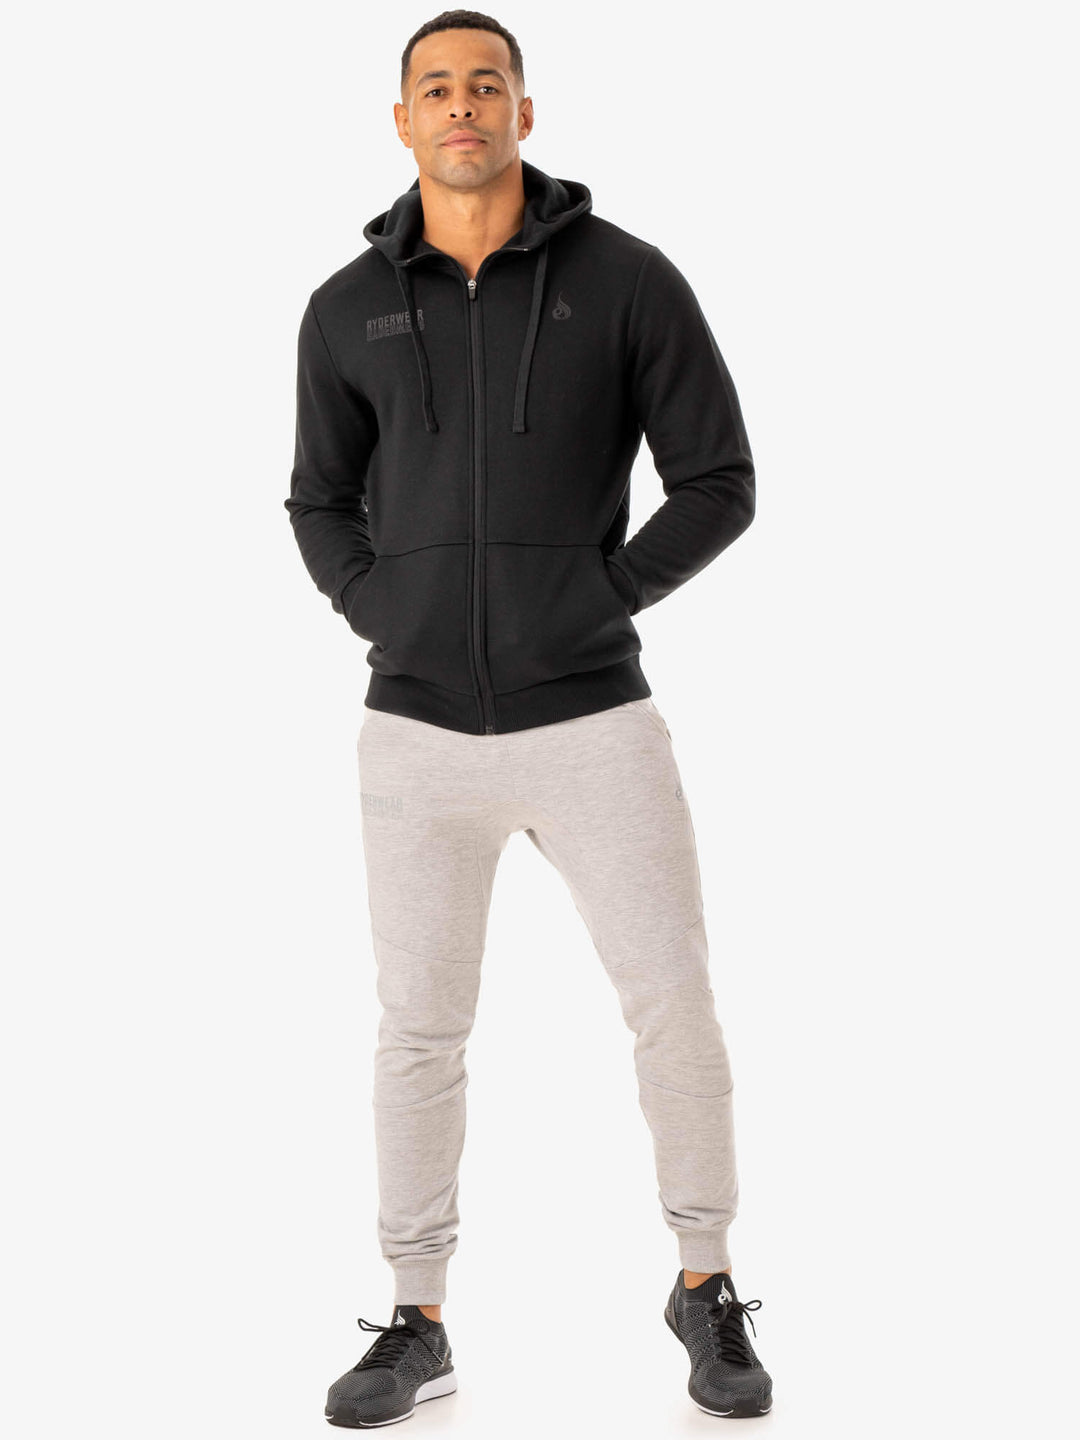 Limitless Zip Up Jacket - Black Clothing Ryderwear 